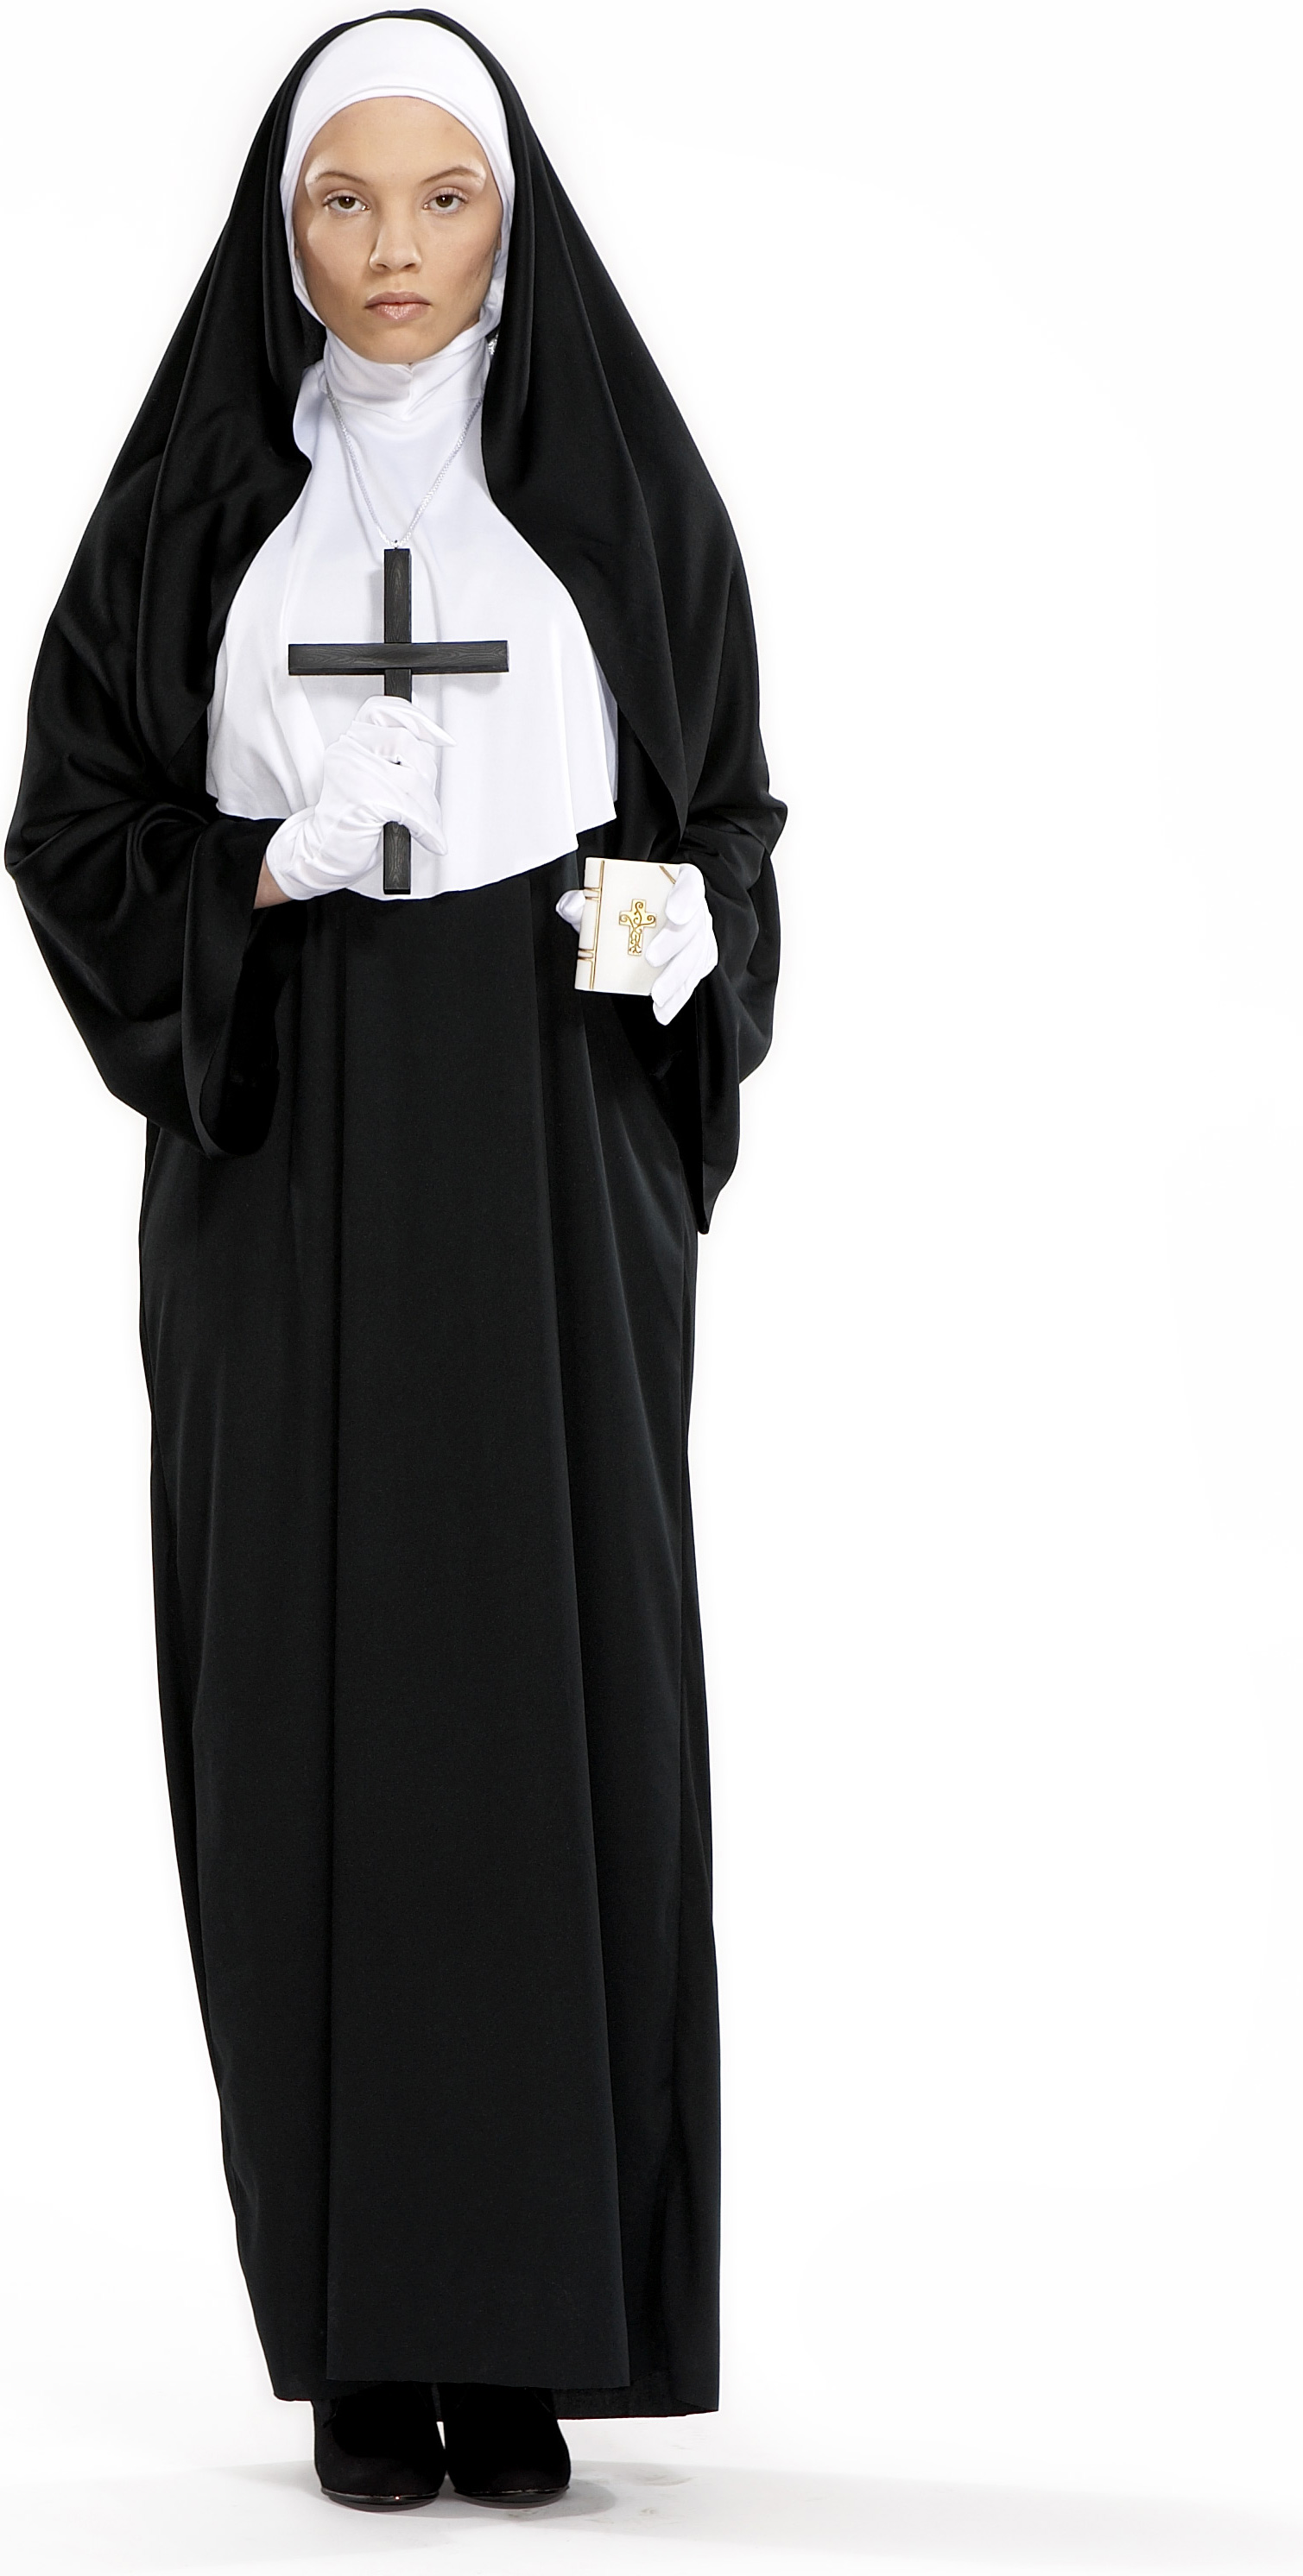 AMC Women's Nun Adult Costume - One-Size (8-14)